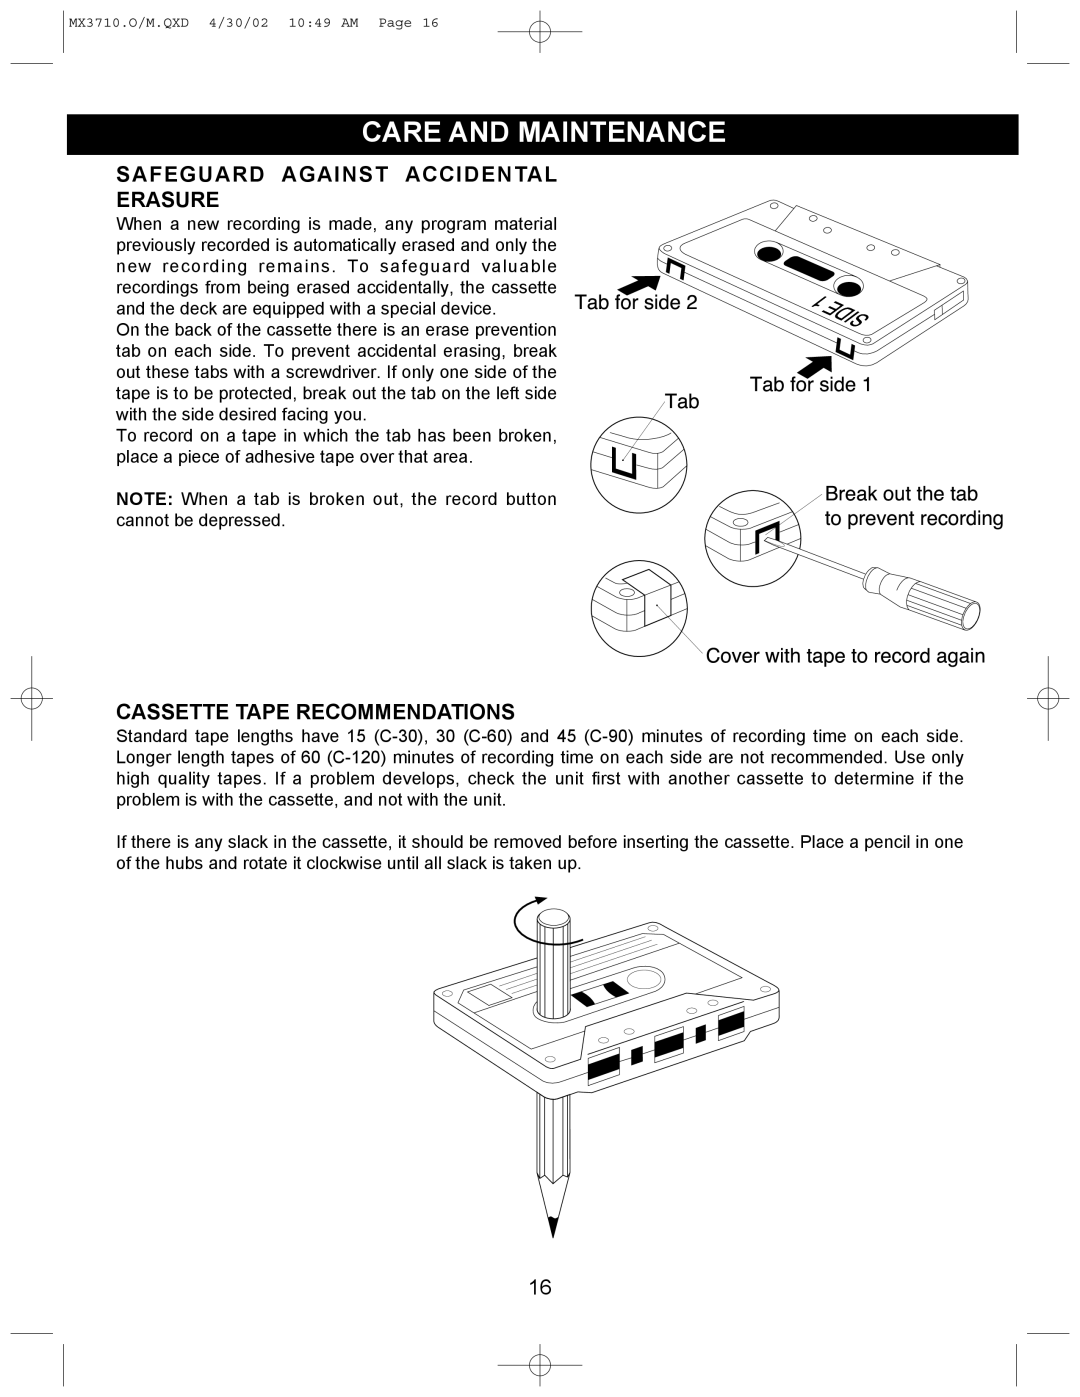 Memorex MX3710 manual Coverwithtapetorecordagain, Safeguard Against Accidental Erasure, Cassette Tape Recommendations 